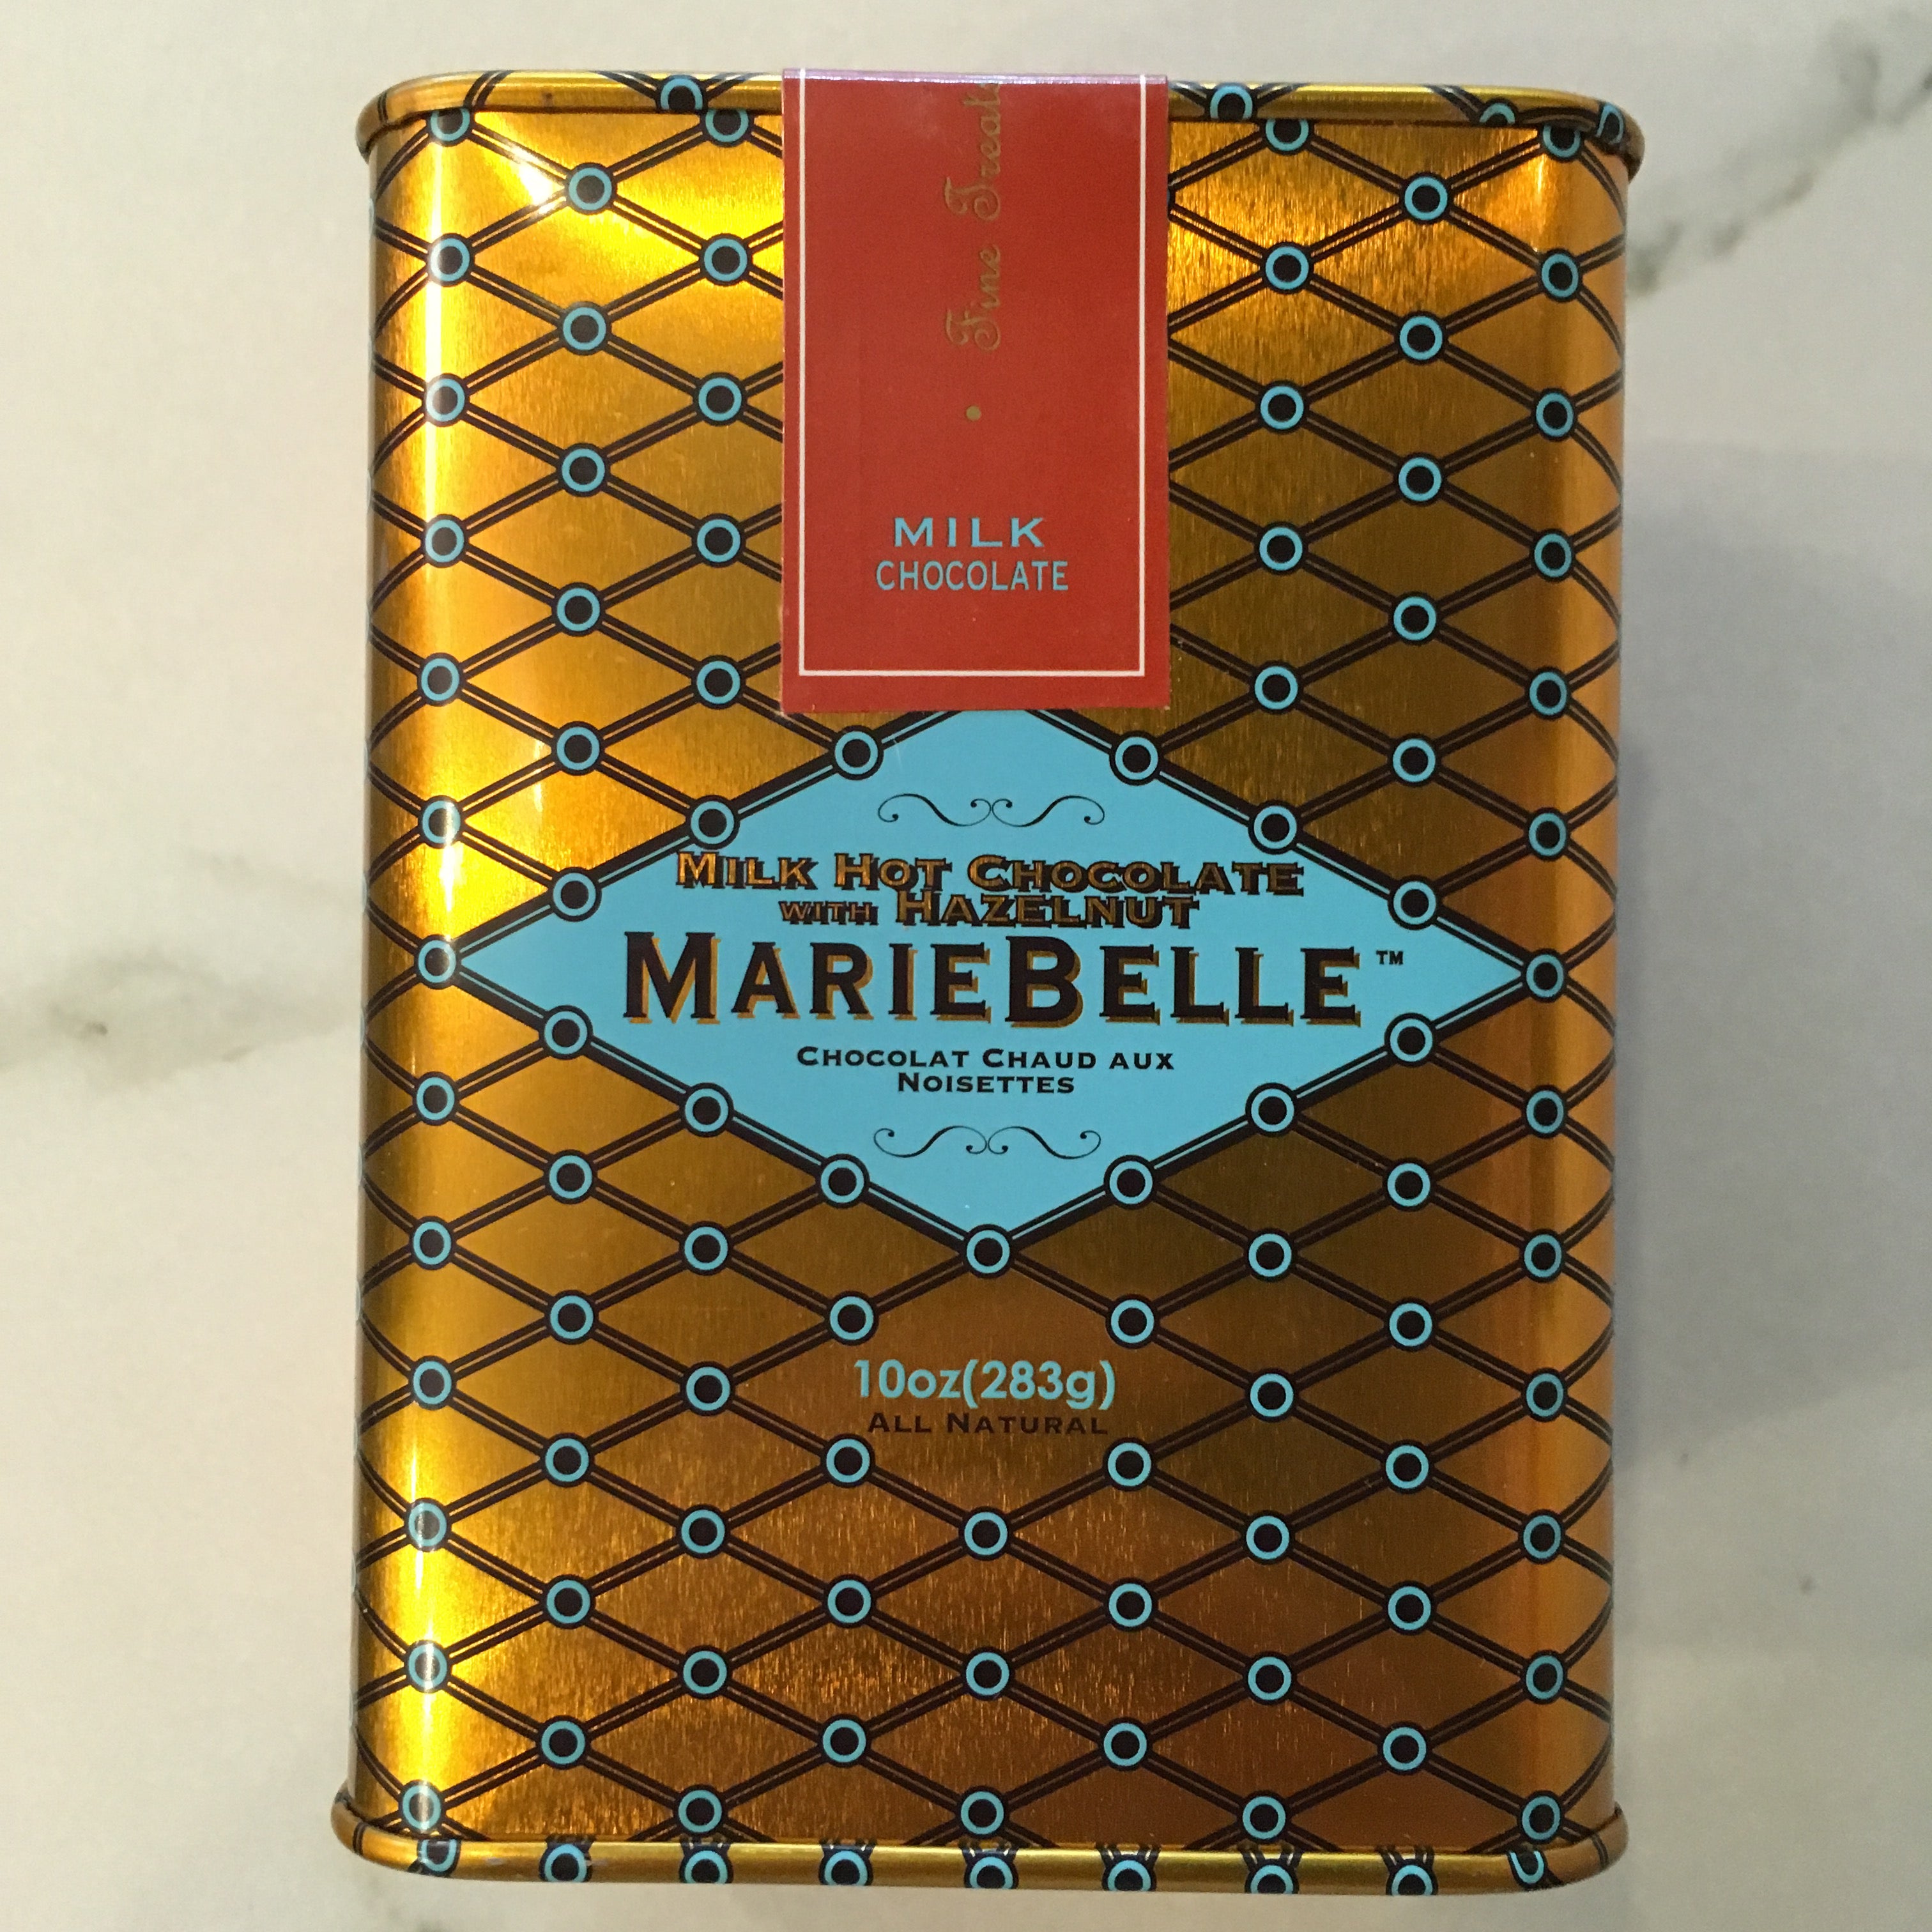 Mariebelle HAZELNUT MILK HOT CHOCOLATE - Cocoa + Co.